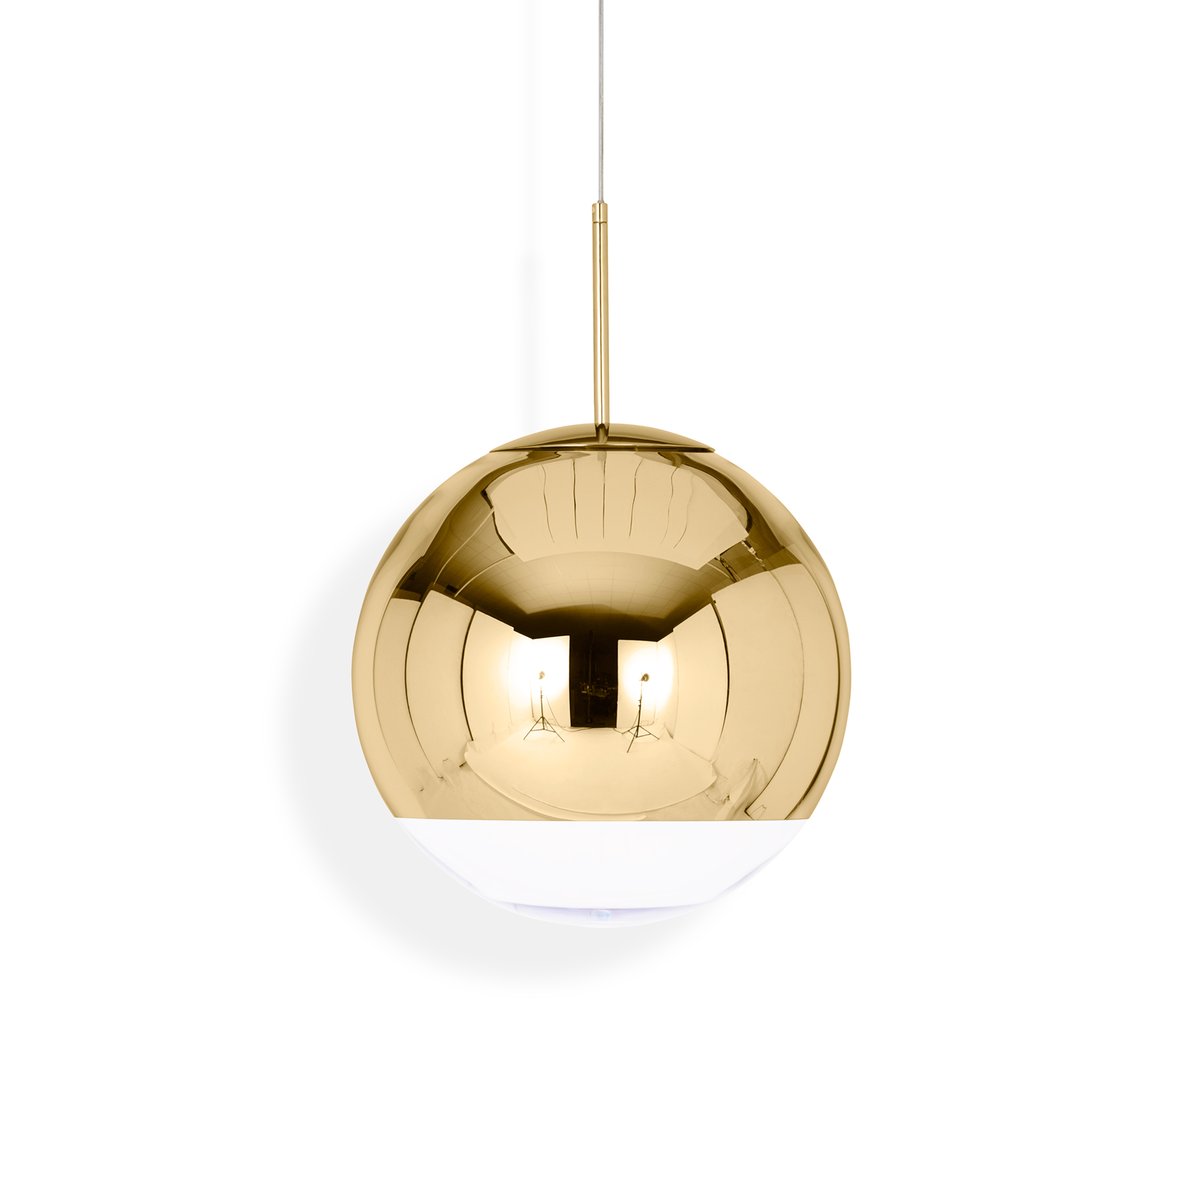 Tom Dixon Mirror Ball hanglamp LED Ø40 cm Gold